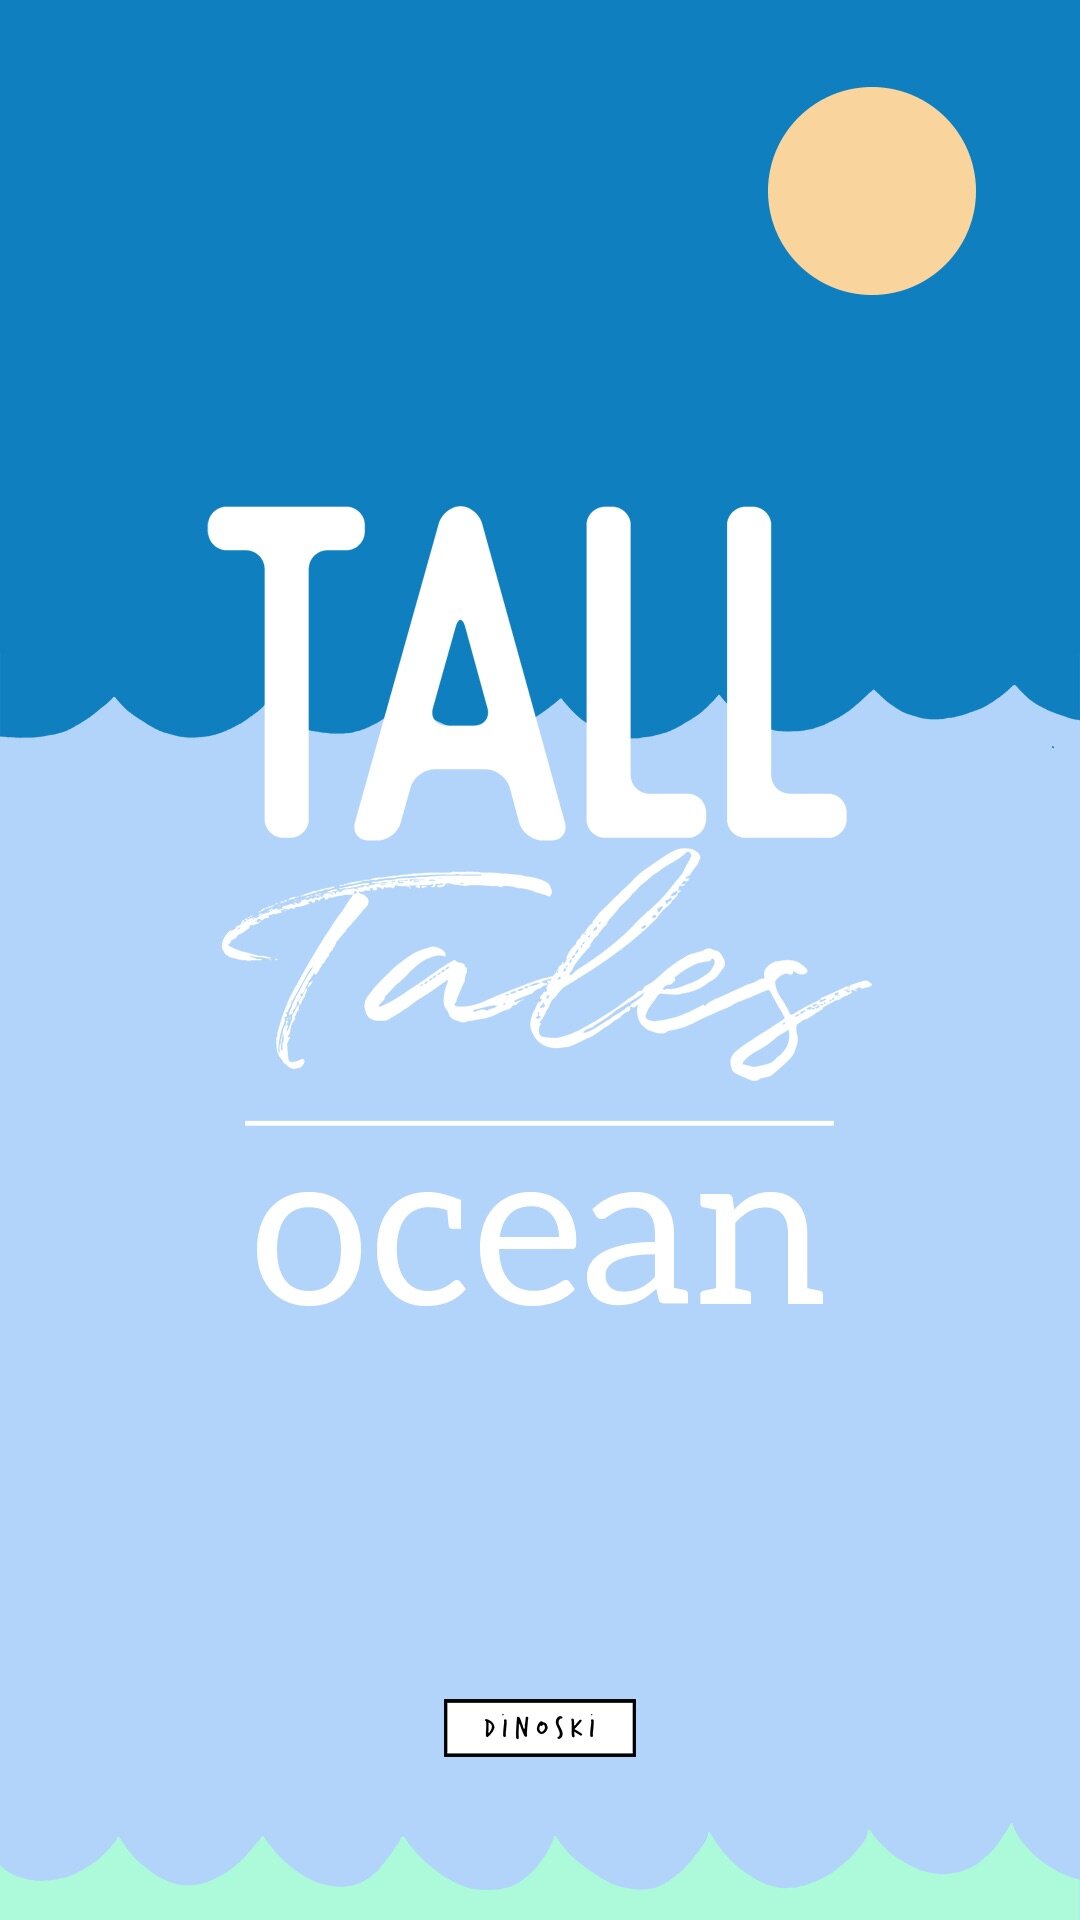 Tall Tales - Ocean.jpg